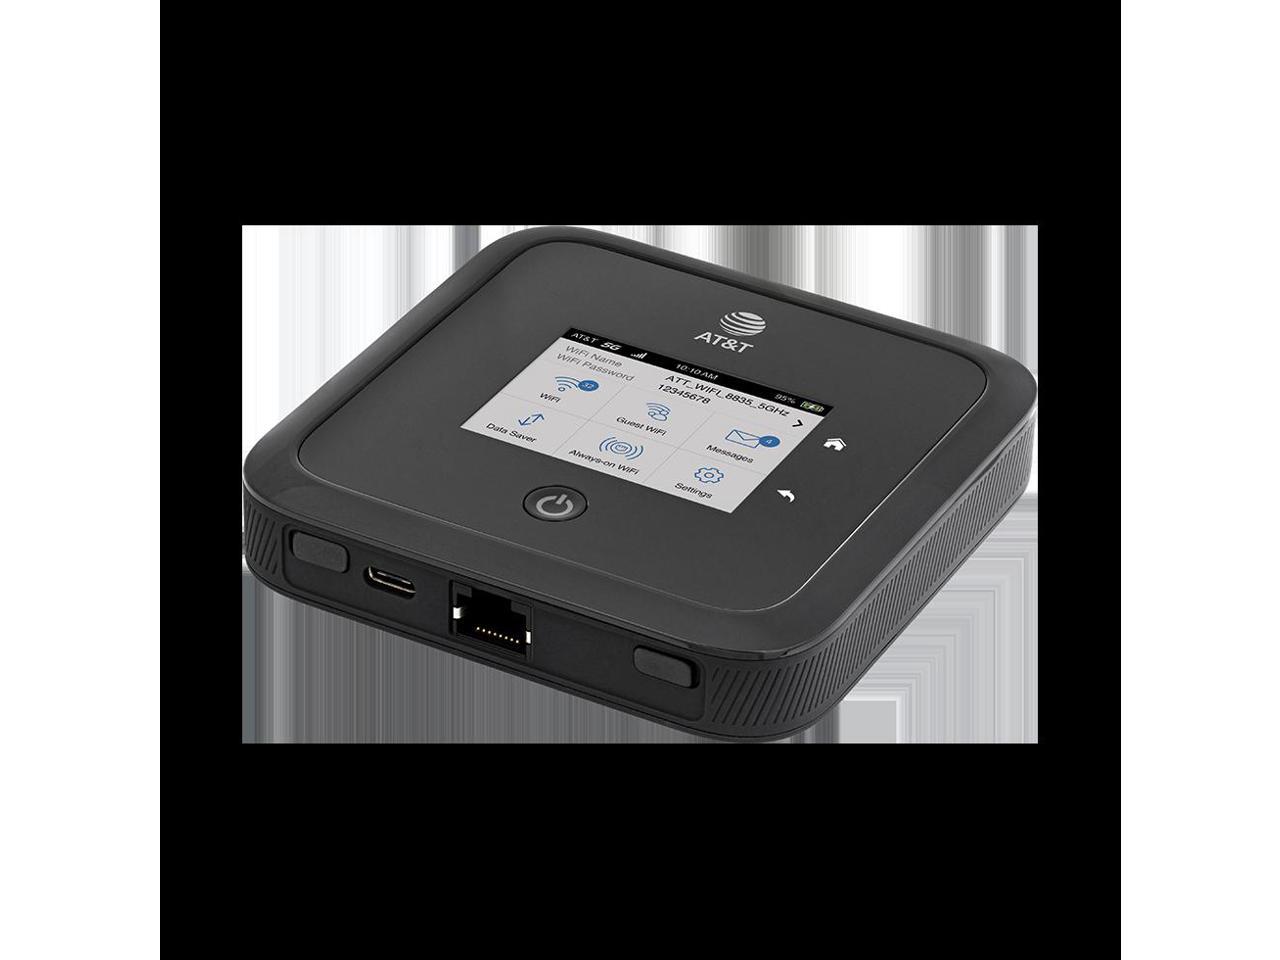 Renewed Black - Netgear Nighthawk 5G Pro MR5100 Mobile Hotspot Router AT&T Branded Latest Wi-Fi 6 Technology Secure & Faster 